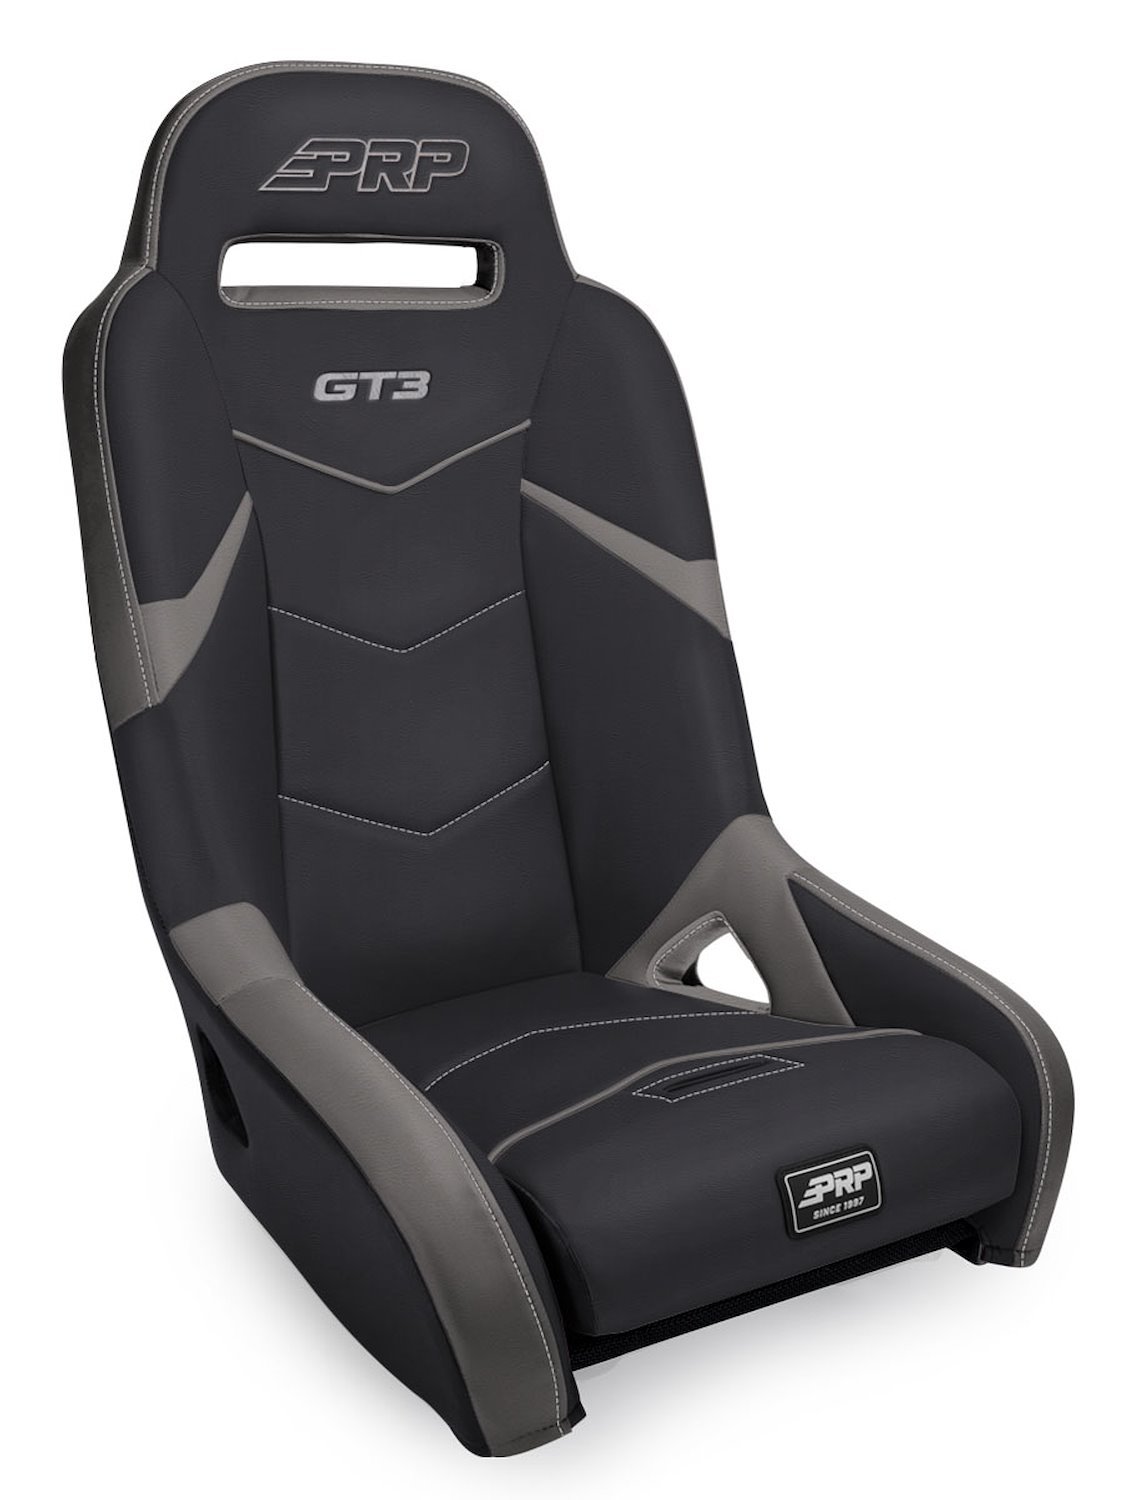 A7308-203 GT3 Rear Suspension Seat, RZR Models [Grey]